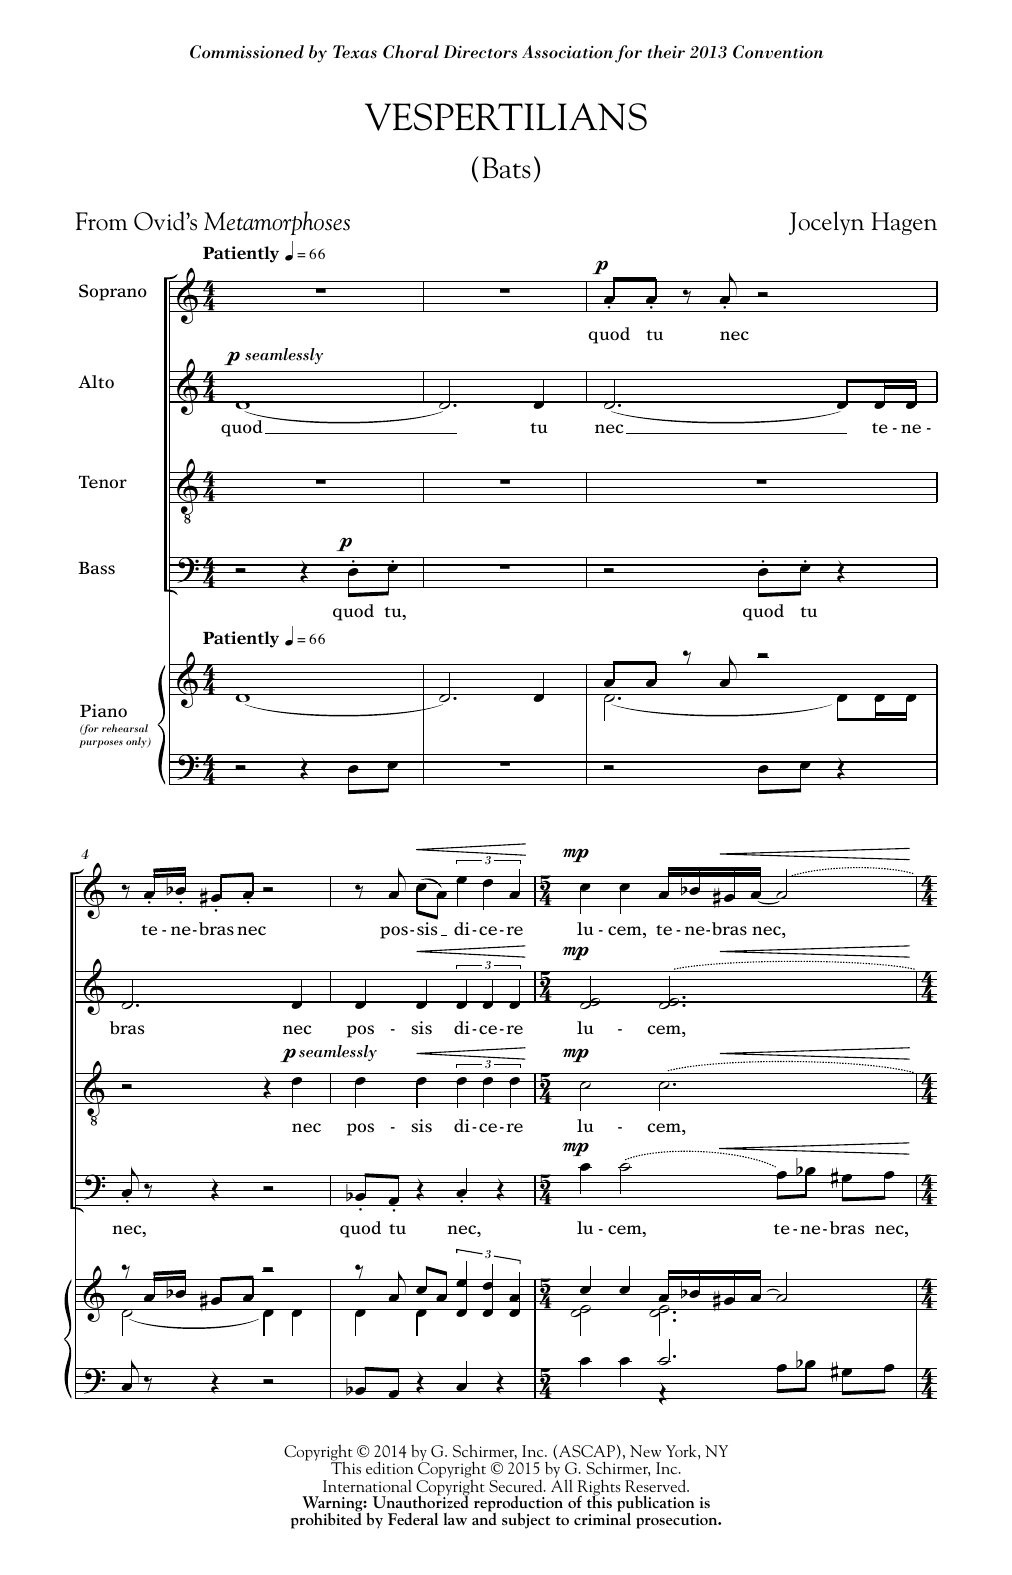 Jocelyn Hagen Vespertilians sheet music notes and chords arranged for SATB Choir